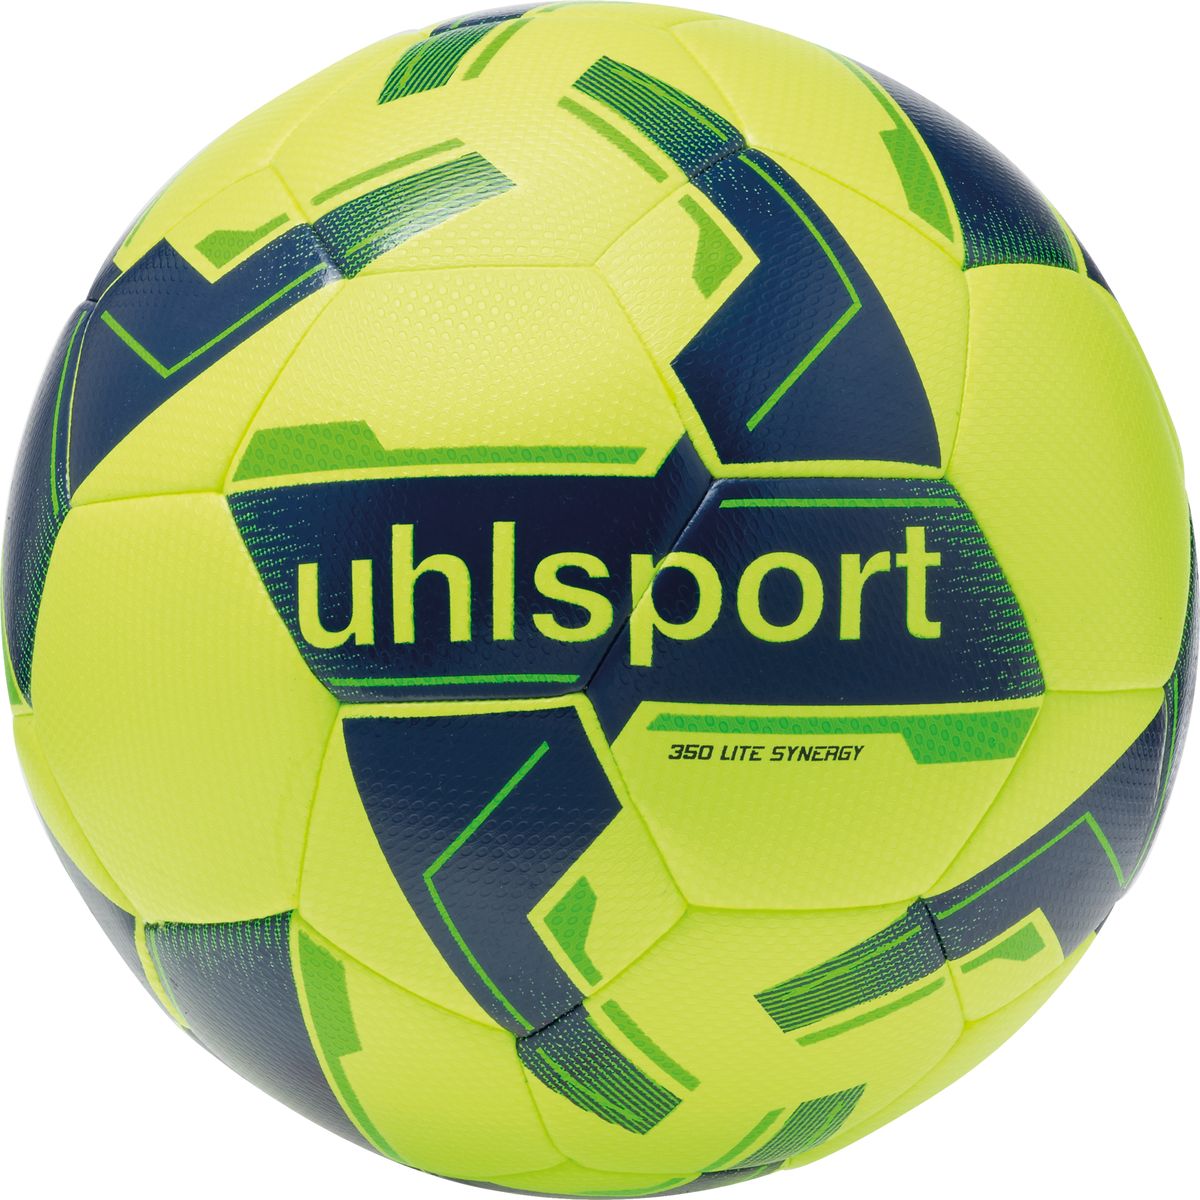 Uhlsport 350 Lite Synergy Outdoor-Fußball